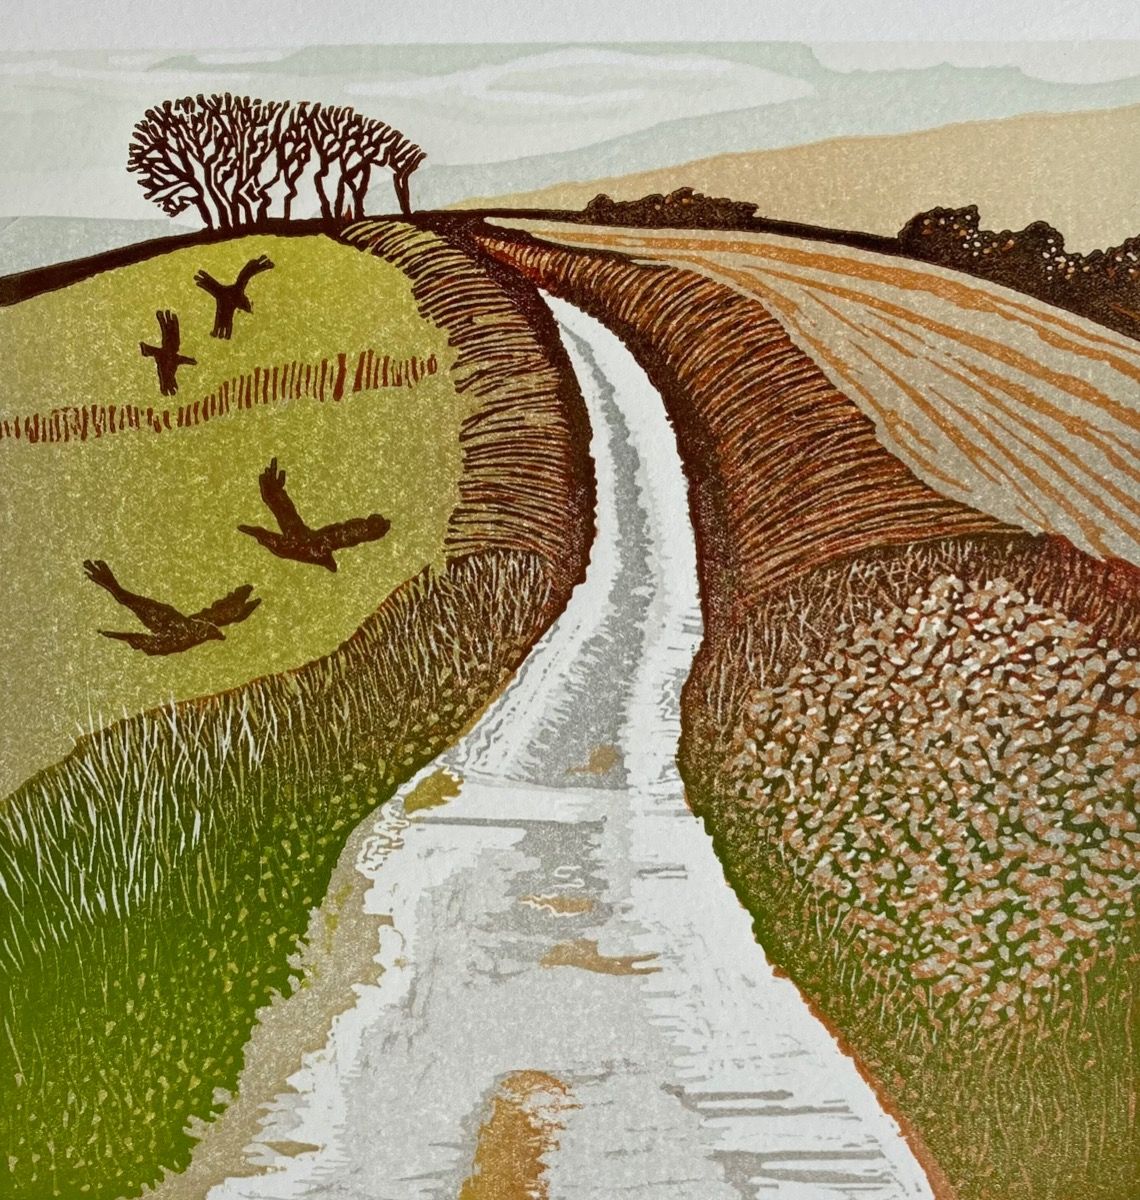 The Road to Coleton Fishacre by Ann Burnham